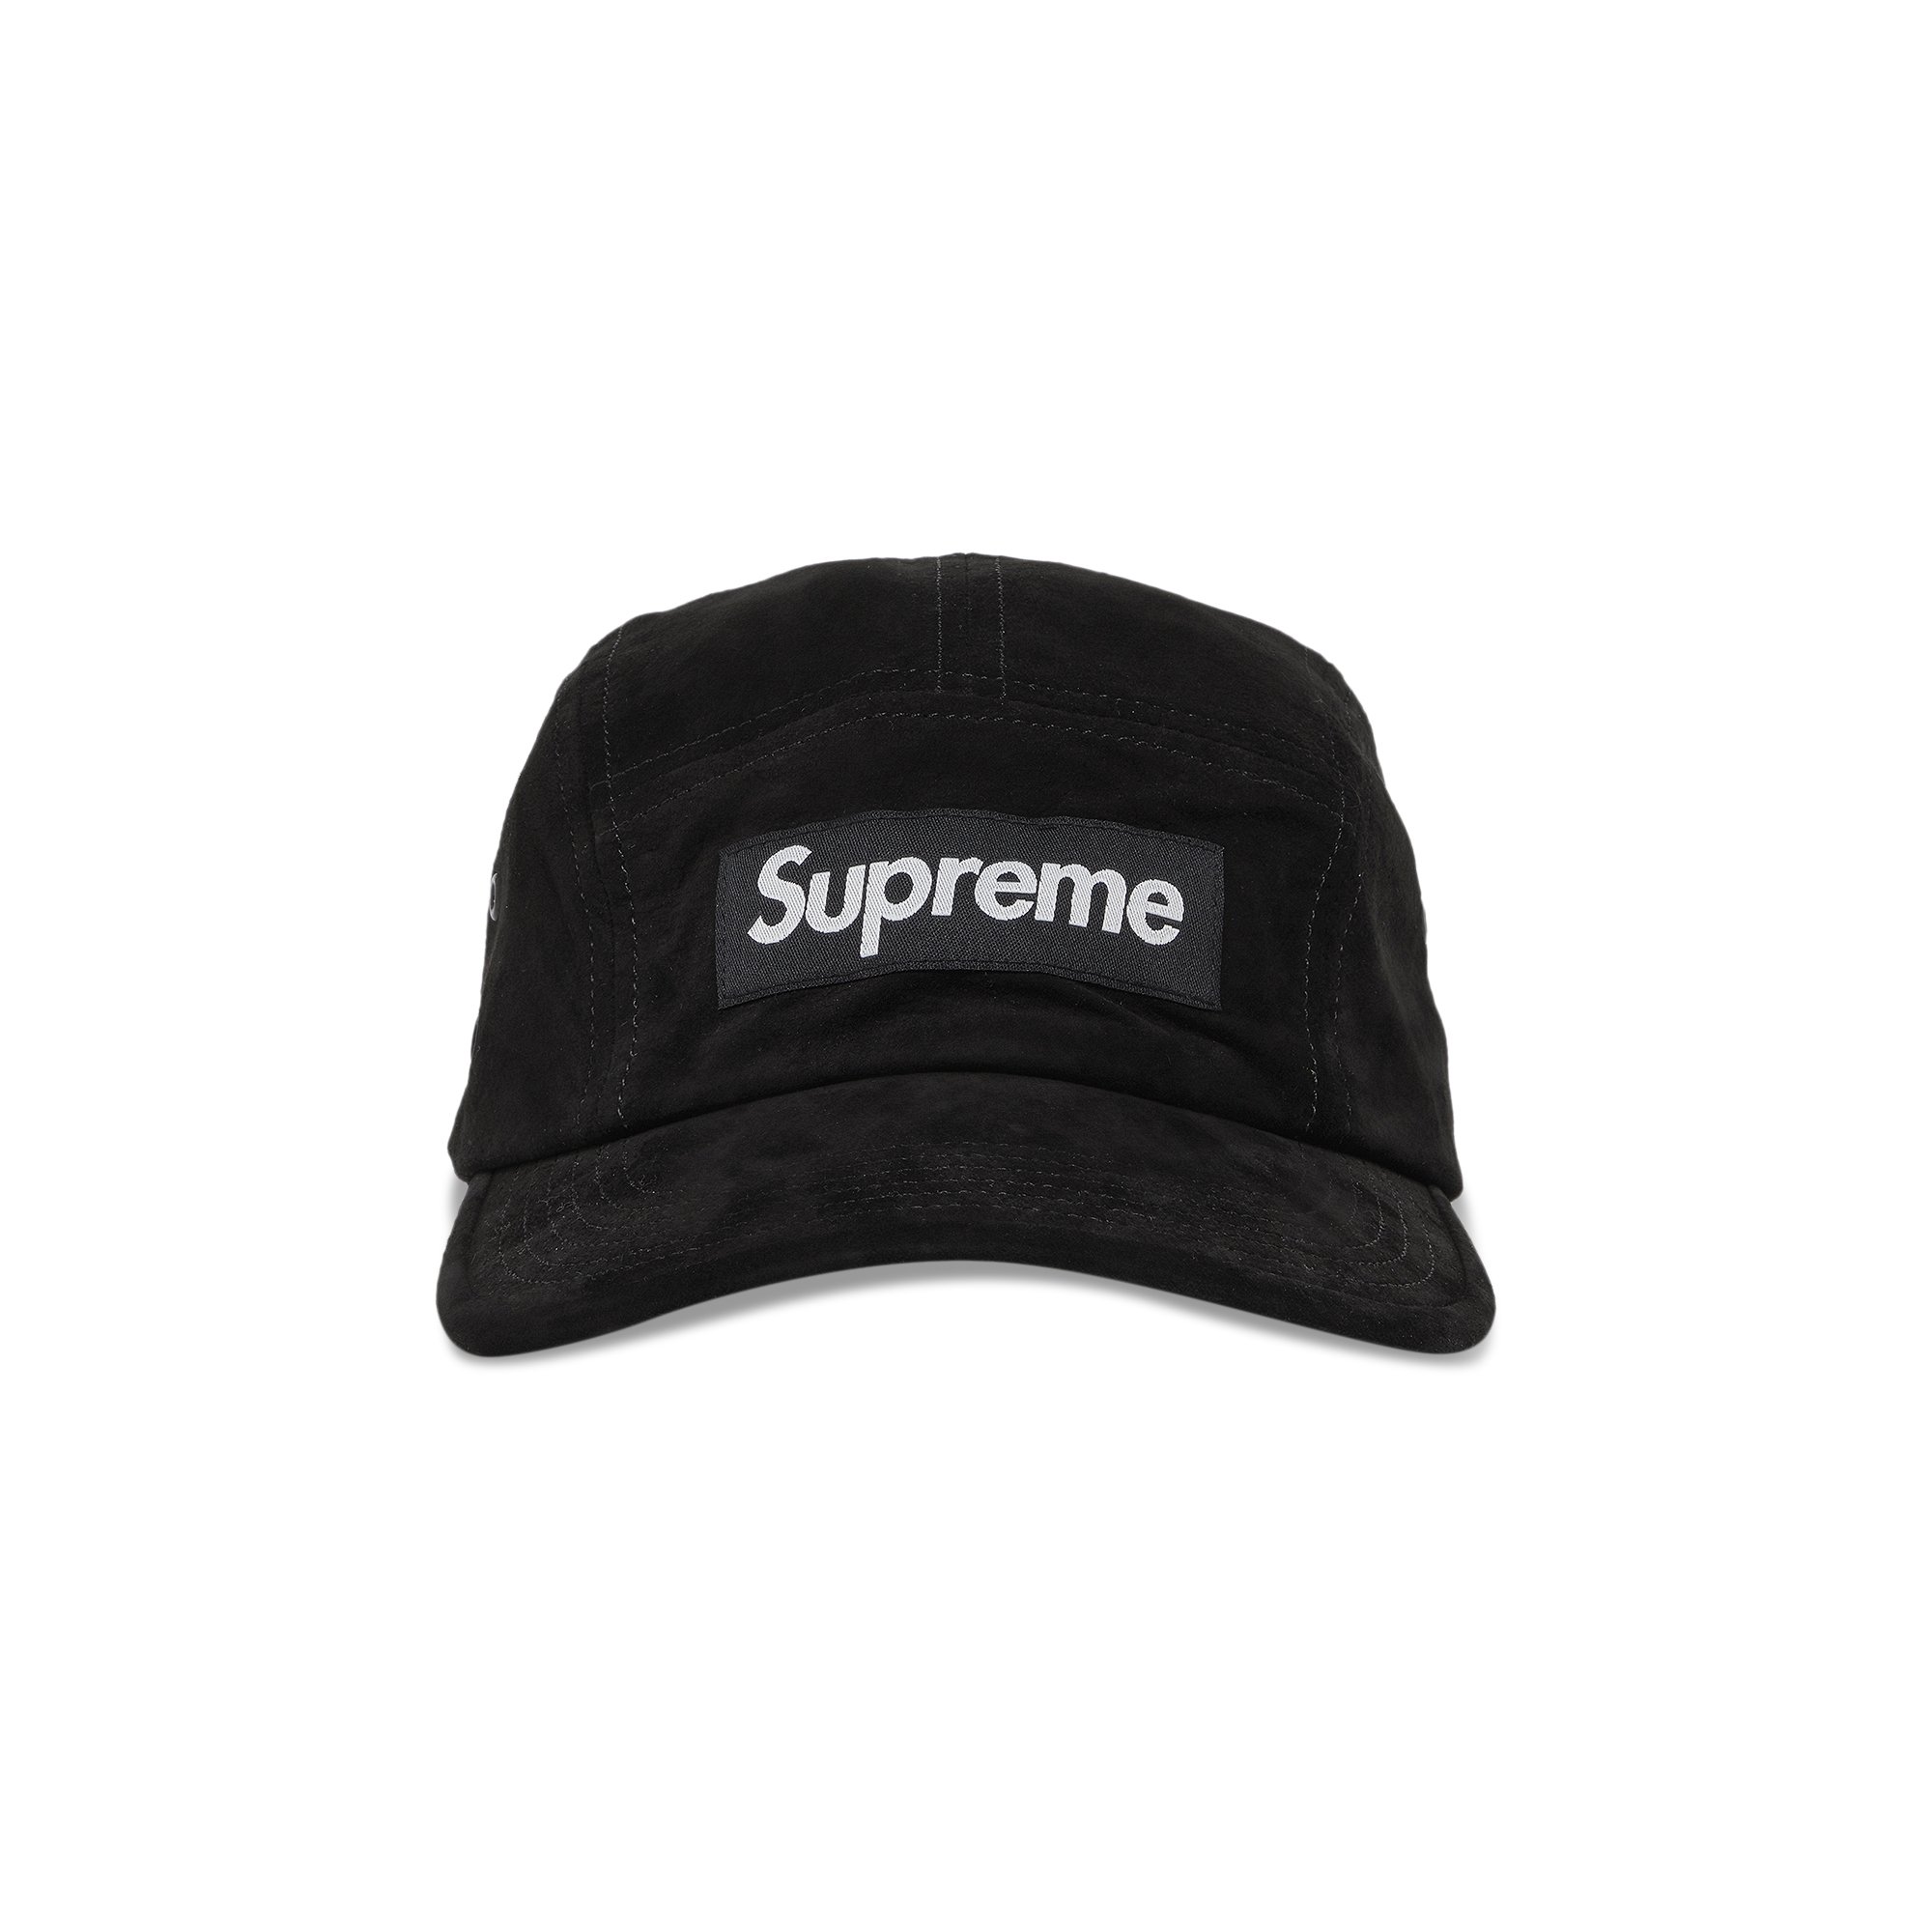 Supreme Box Logo Suede Black Cap S/S17